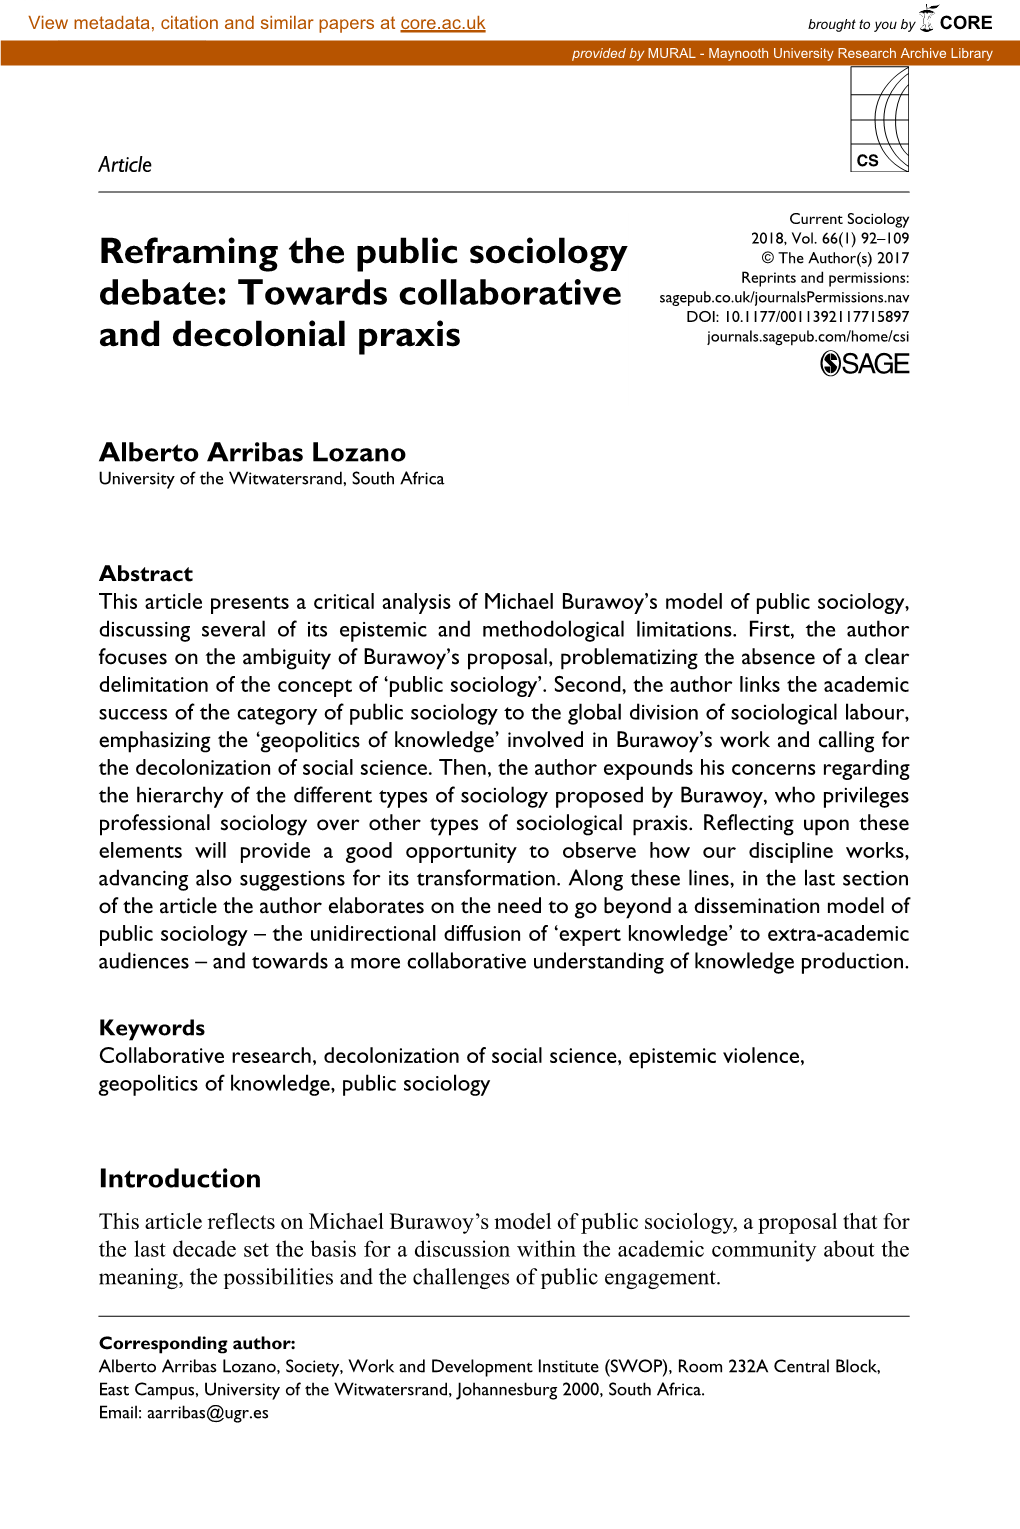 Reframing the Public Sociology Debate: Towards Collaborative